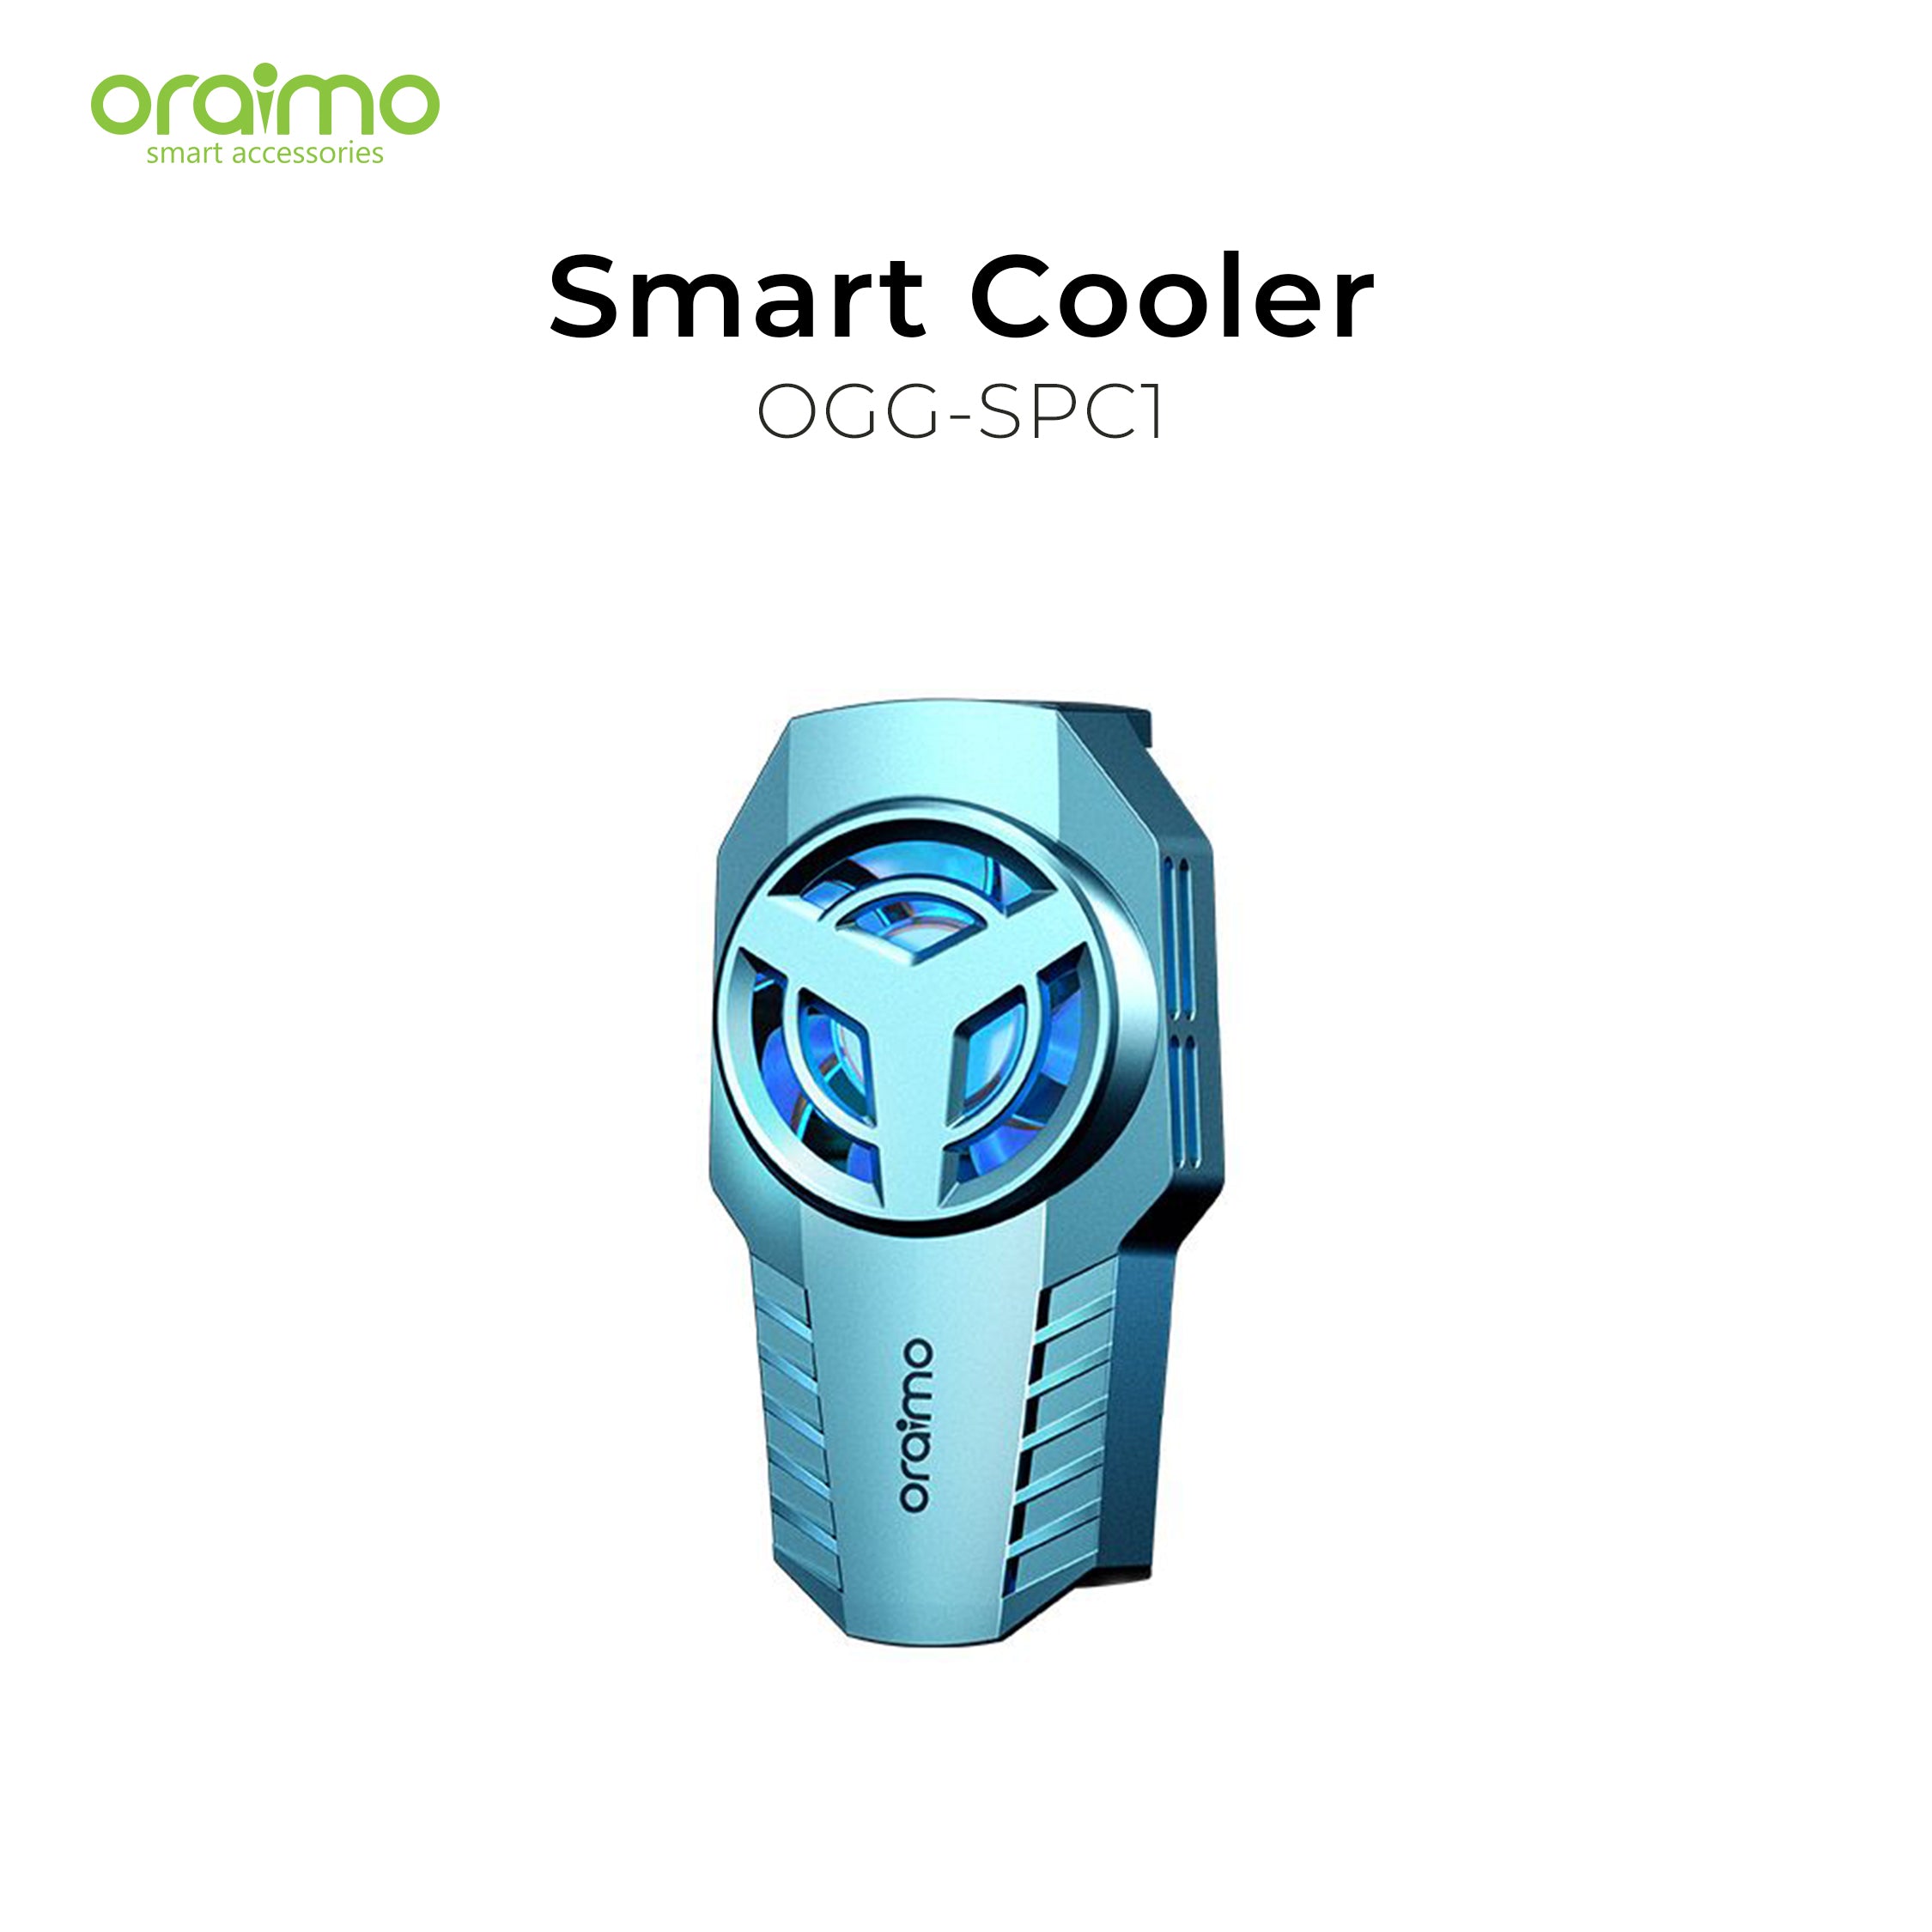 Oraimo Smart Cooler OGG-SPC1